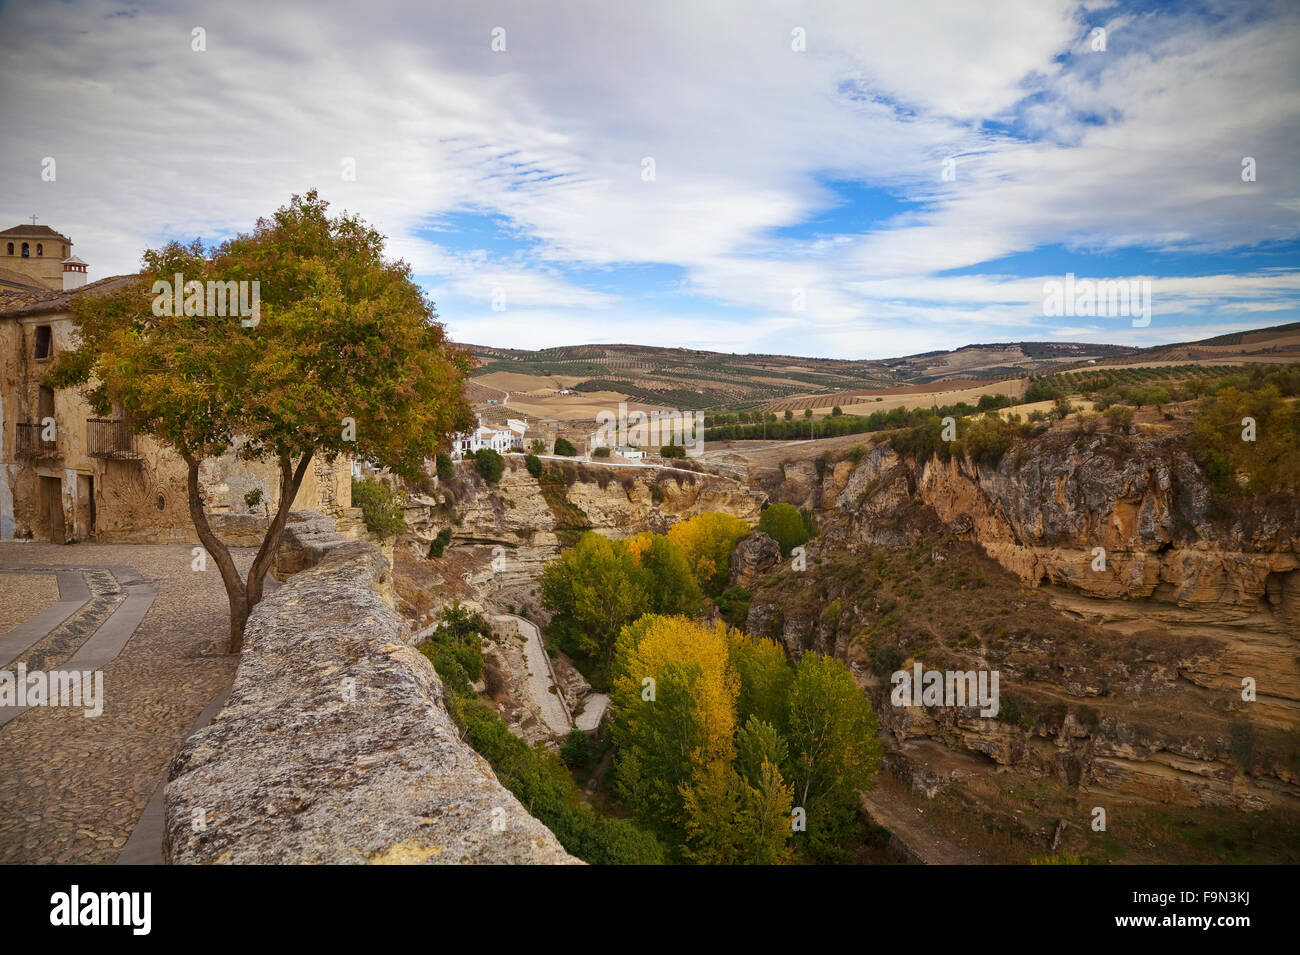 Ulmen im Herbst in die Tajo oder Canyon unterhalb Alhama de Granada, Provinz Granada, Spanien Stockfoto